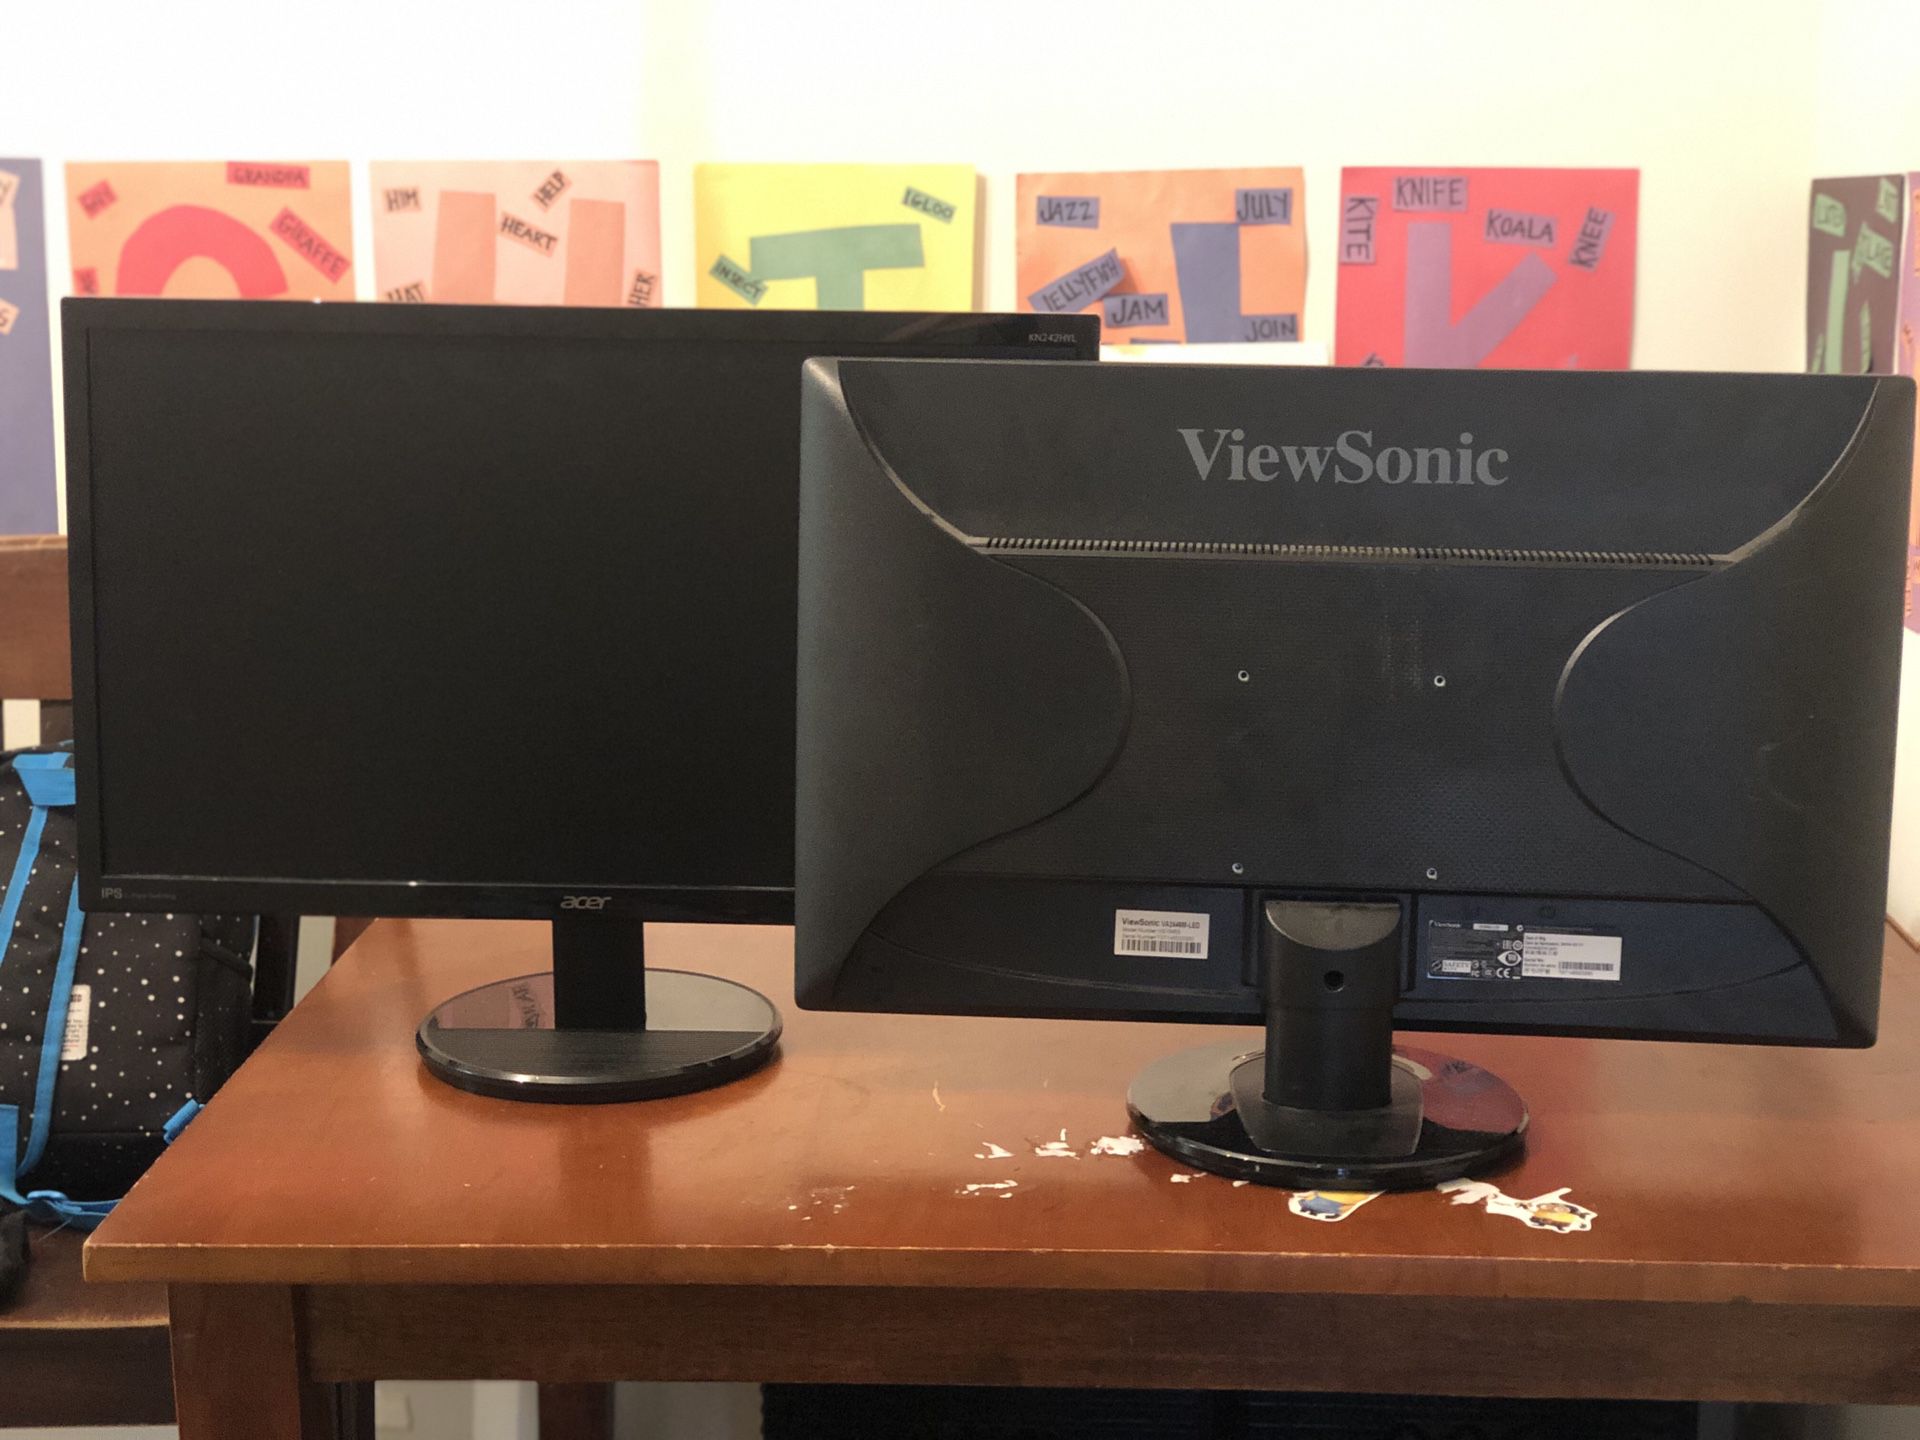 Acer ViewSonic Monitors